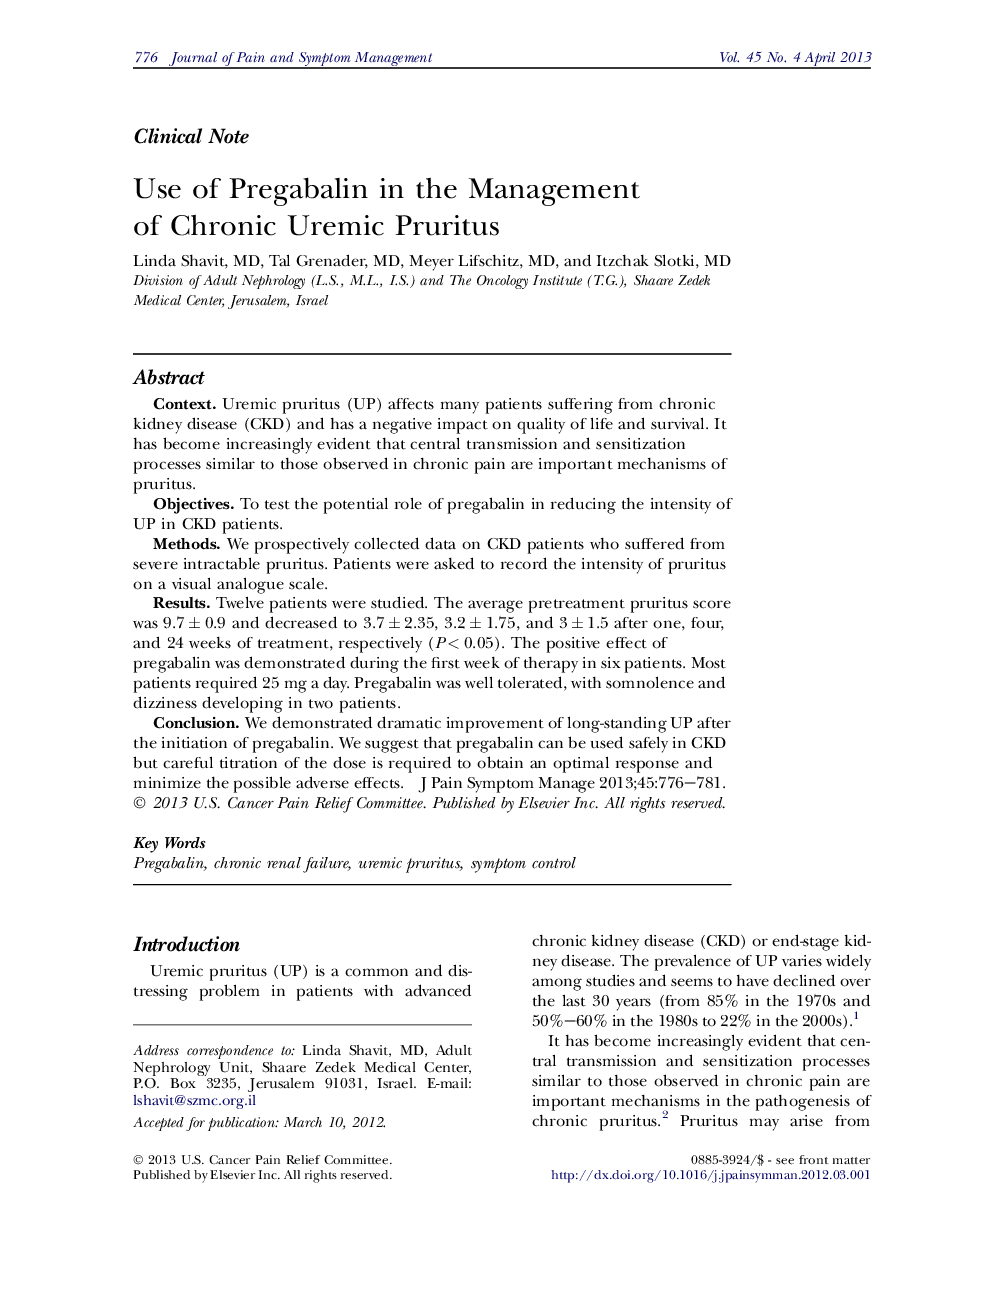 Use of Pregabalin in the Management of Chronic Uremic Pruritus